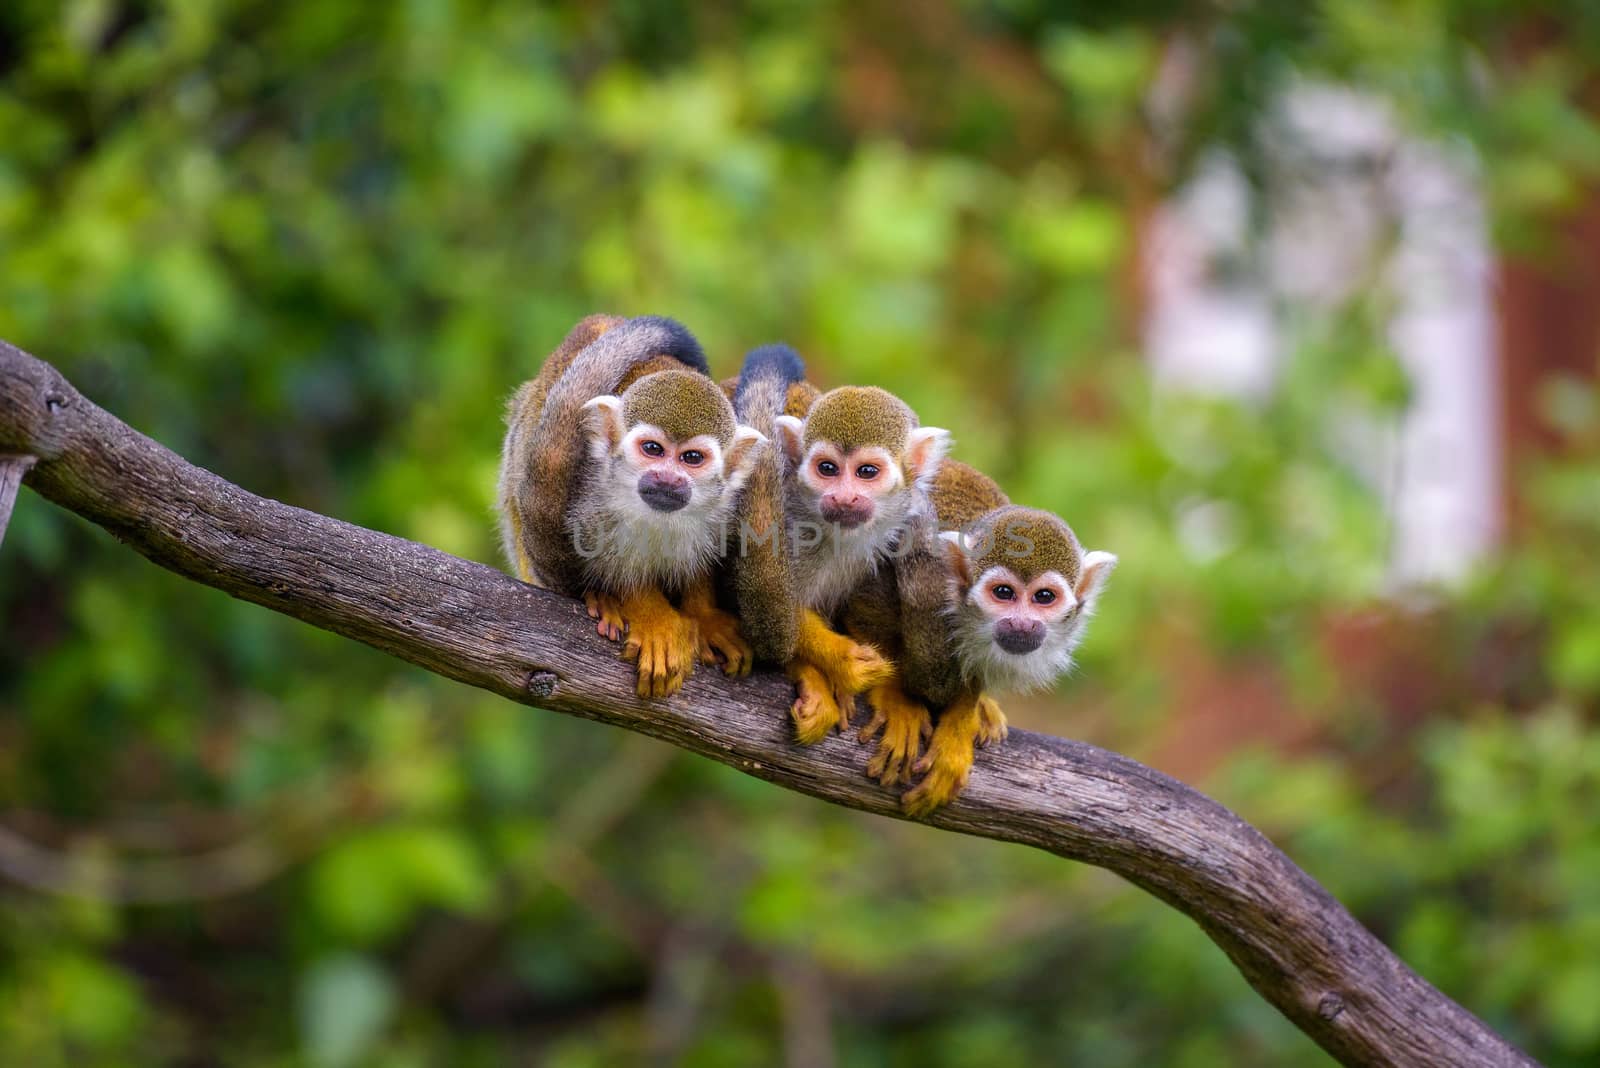 Three common squirrel monkeys sitting on a tree branch by nickfox